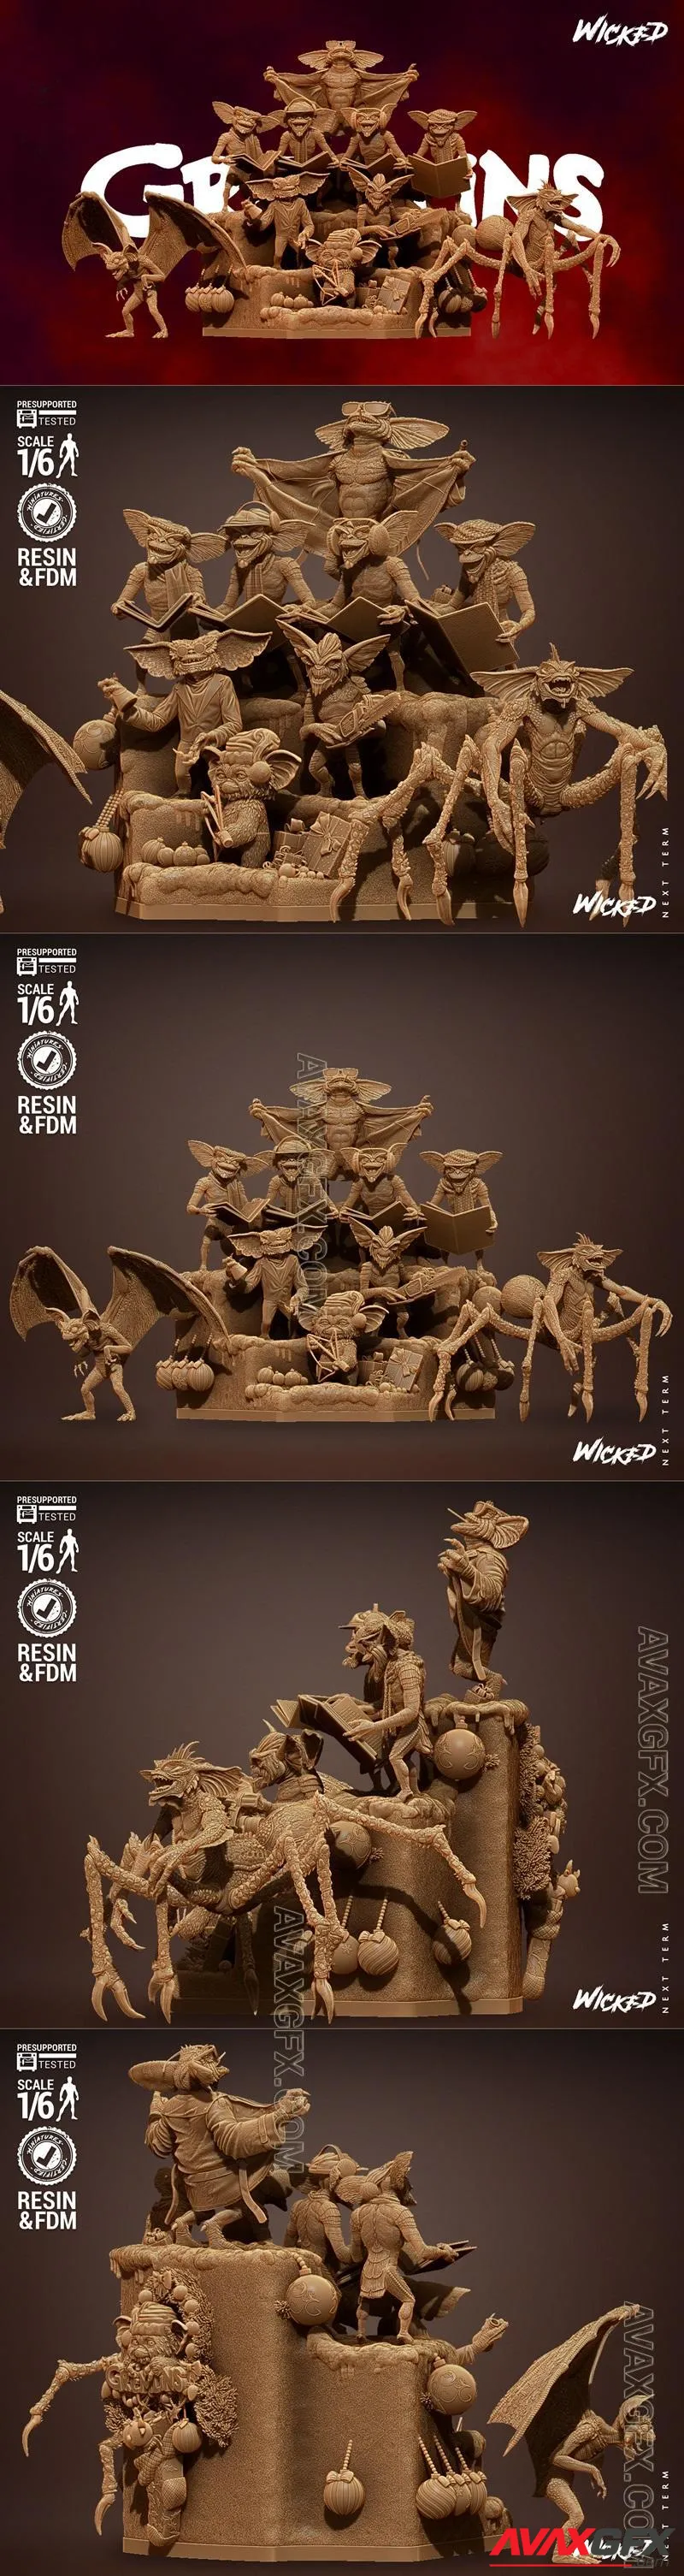 Wicked - Gremlins Diorama Complete - STL 3D Model